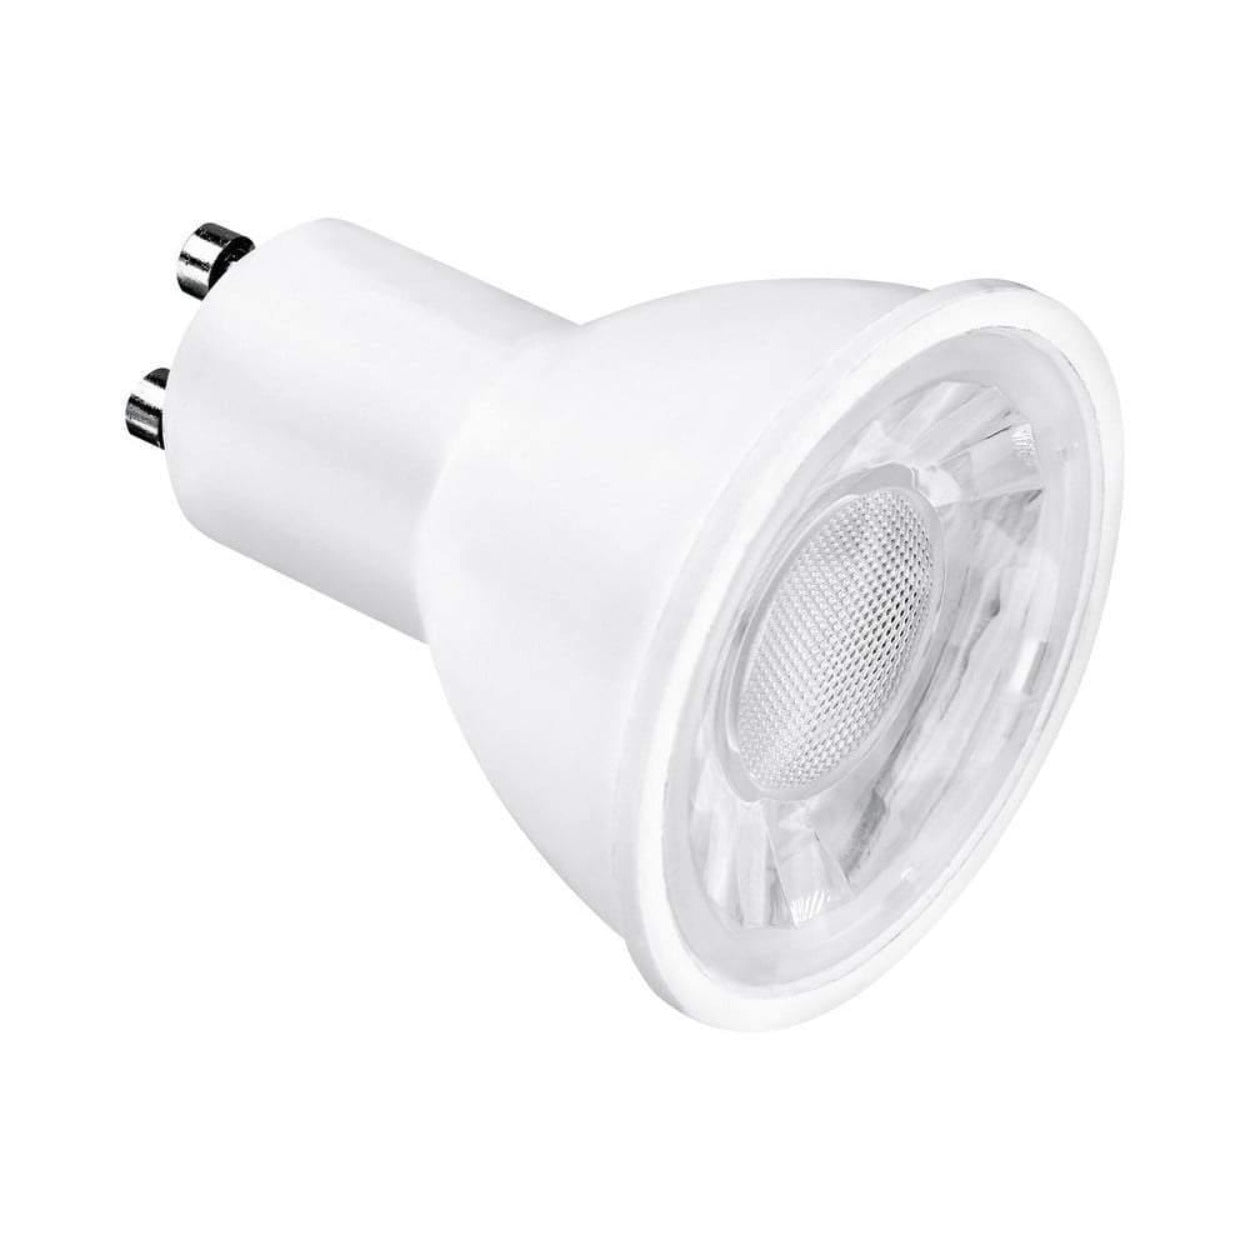 ANKUR GU10 LED MODULE LAMP - Ankur Lighting